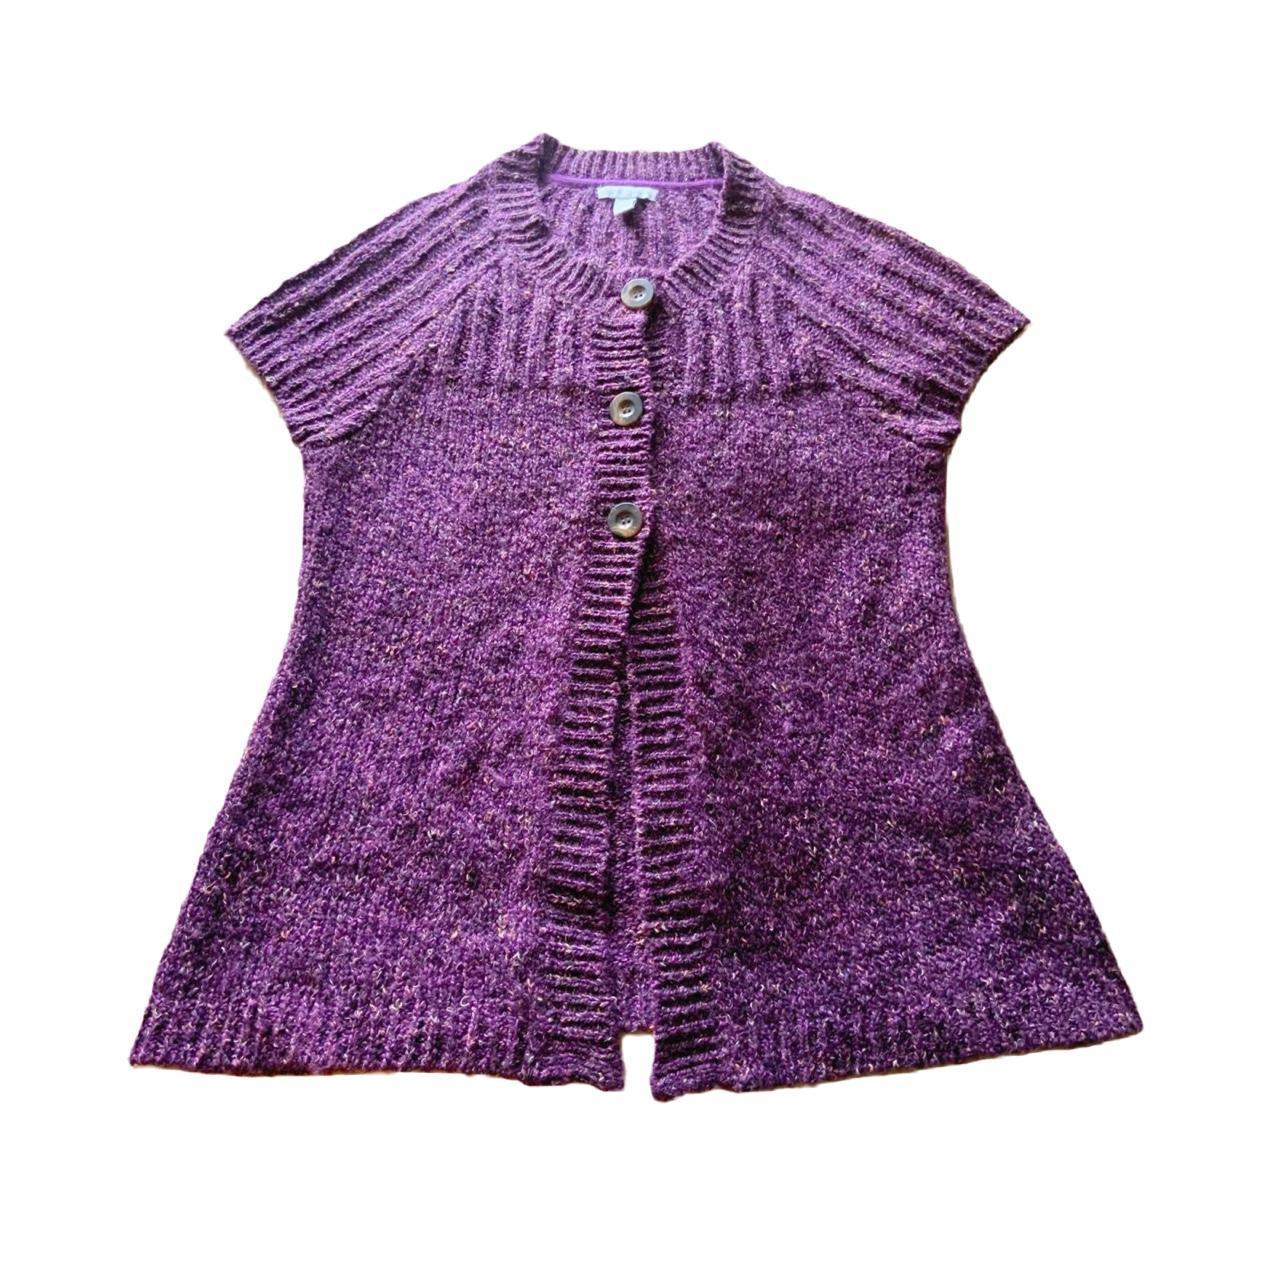 Product Image 2 - Vintage Purple Wool Cardigan

☆ A